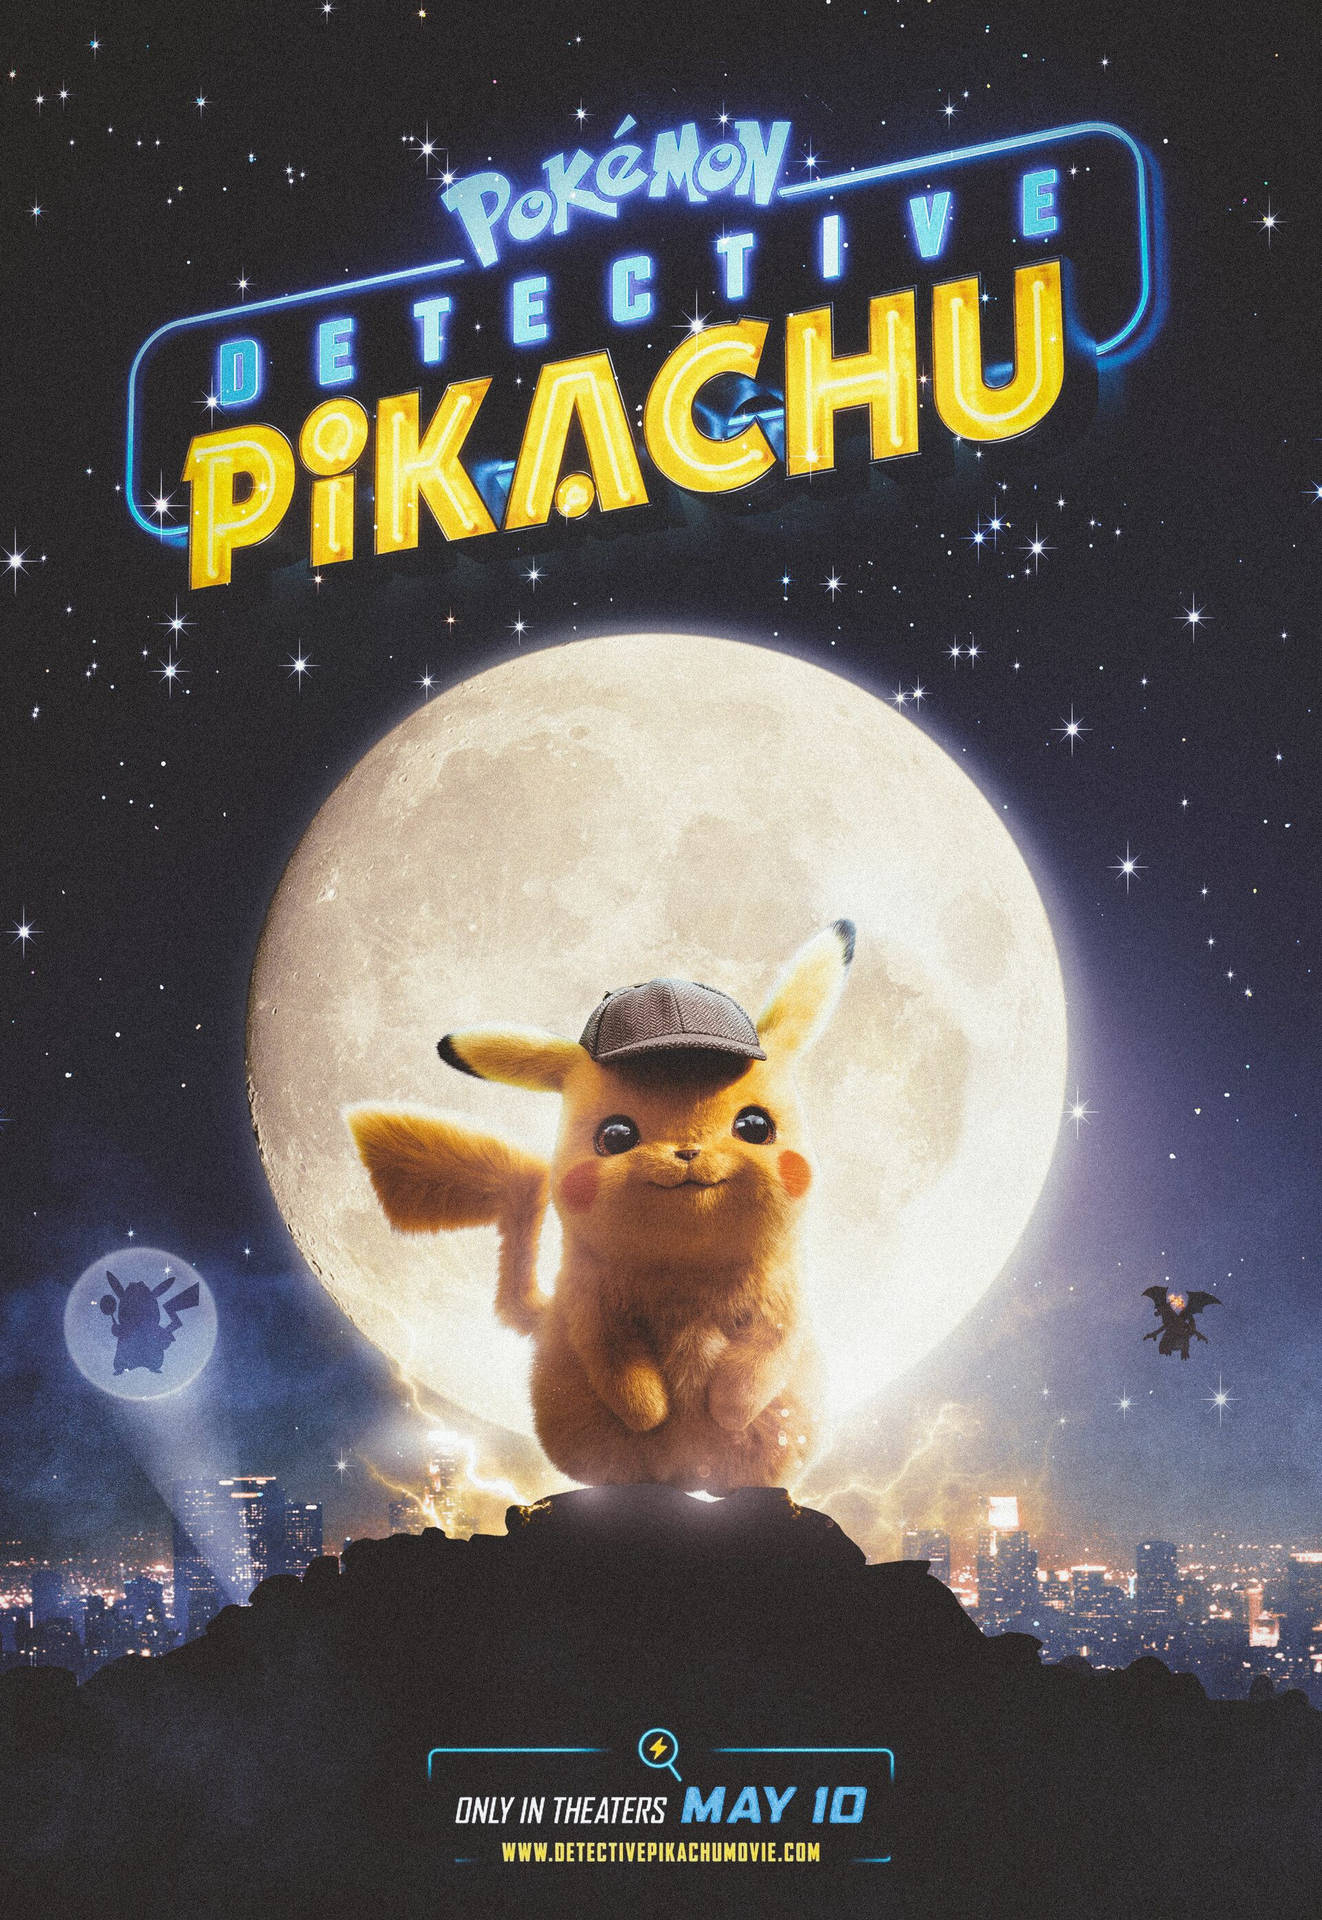 Movie Poster Detective Pikachu Background